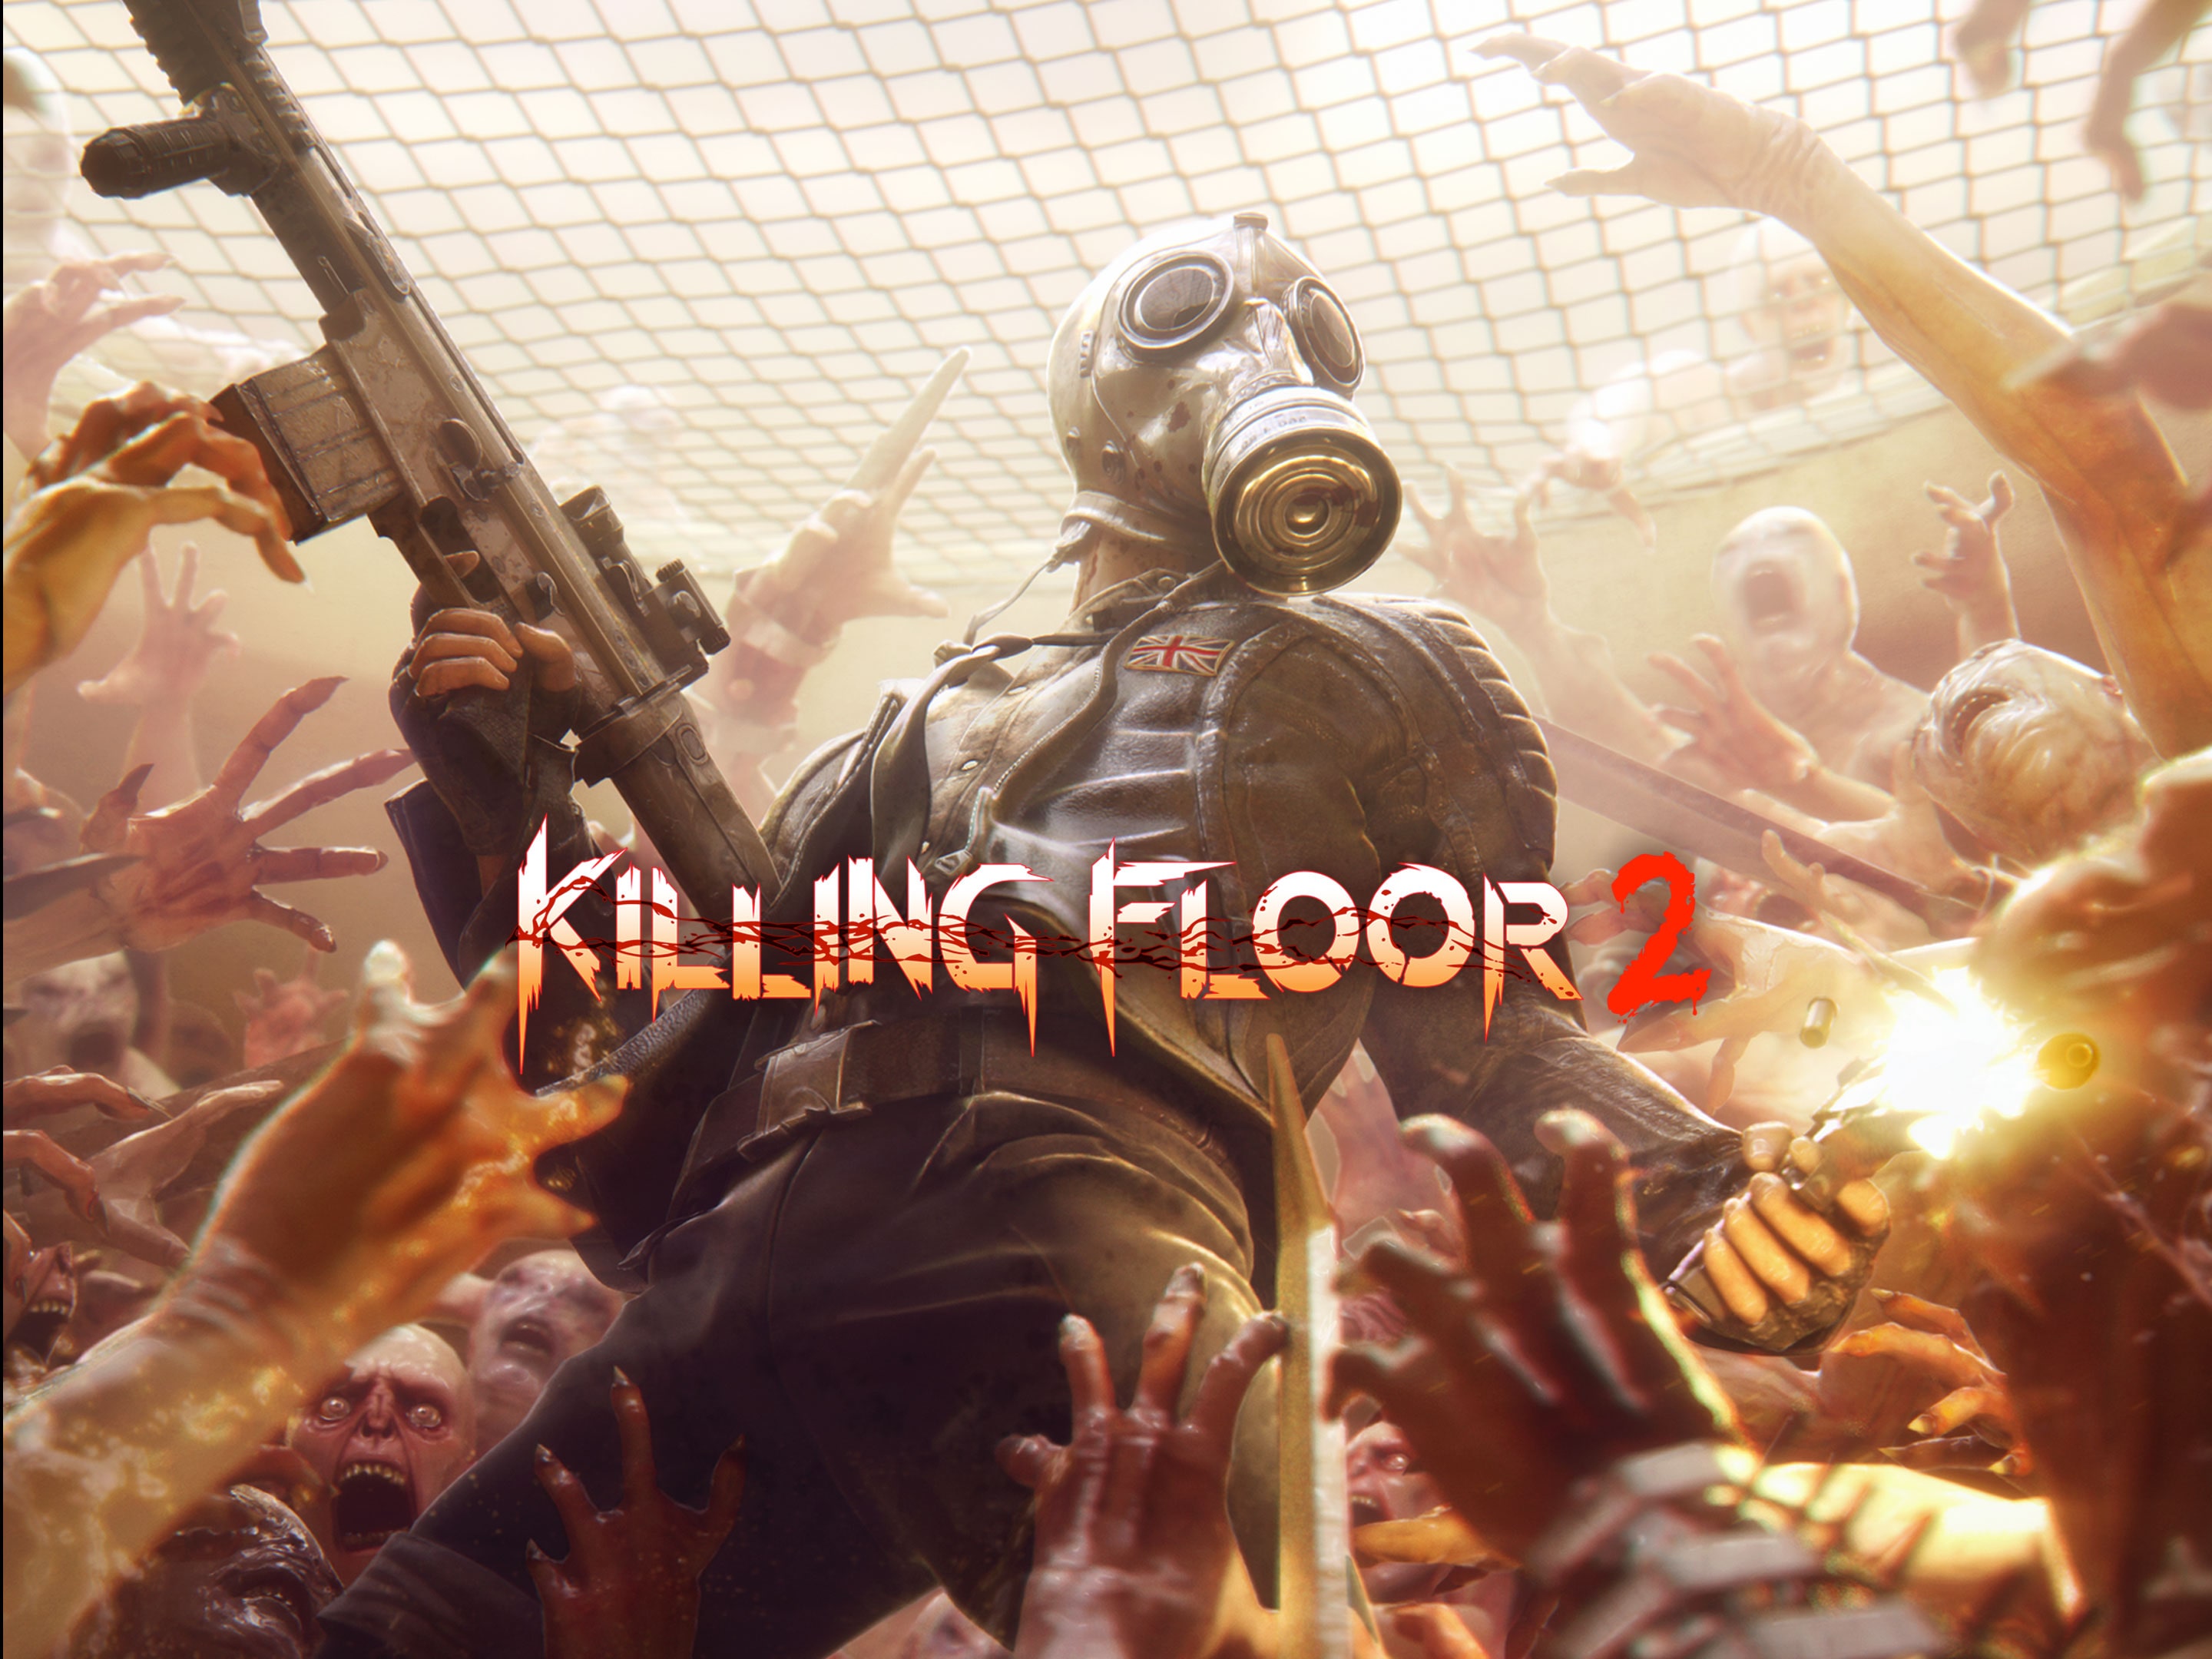 killing floor 2 ps4 digital code